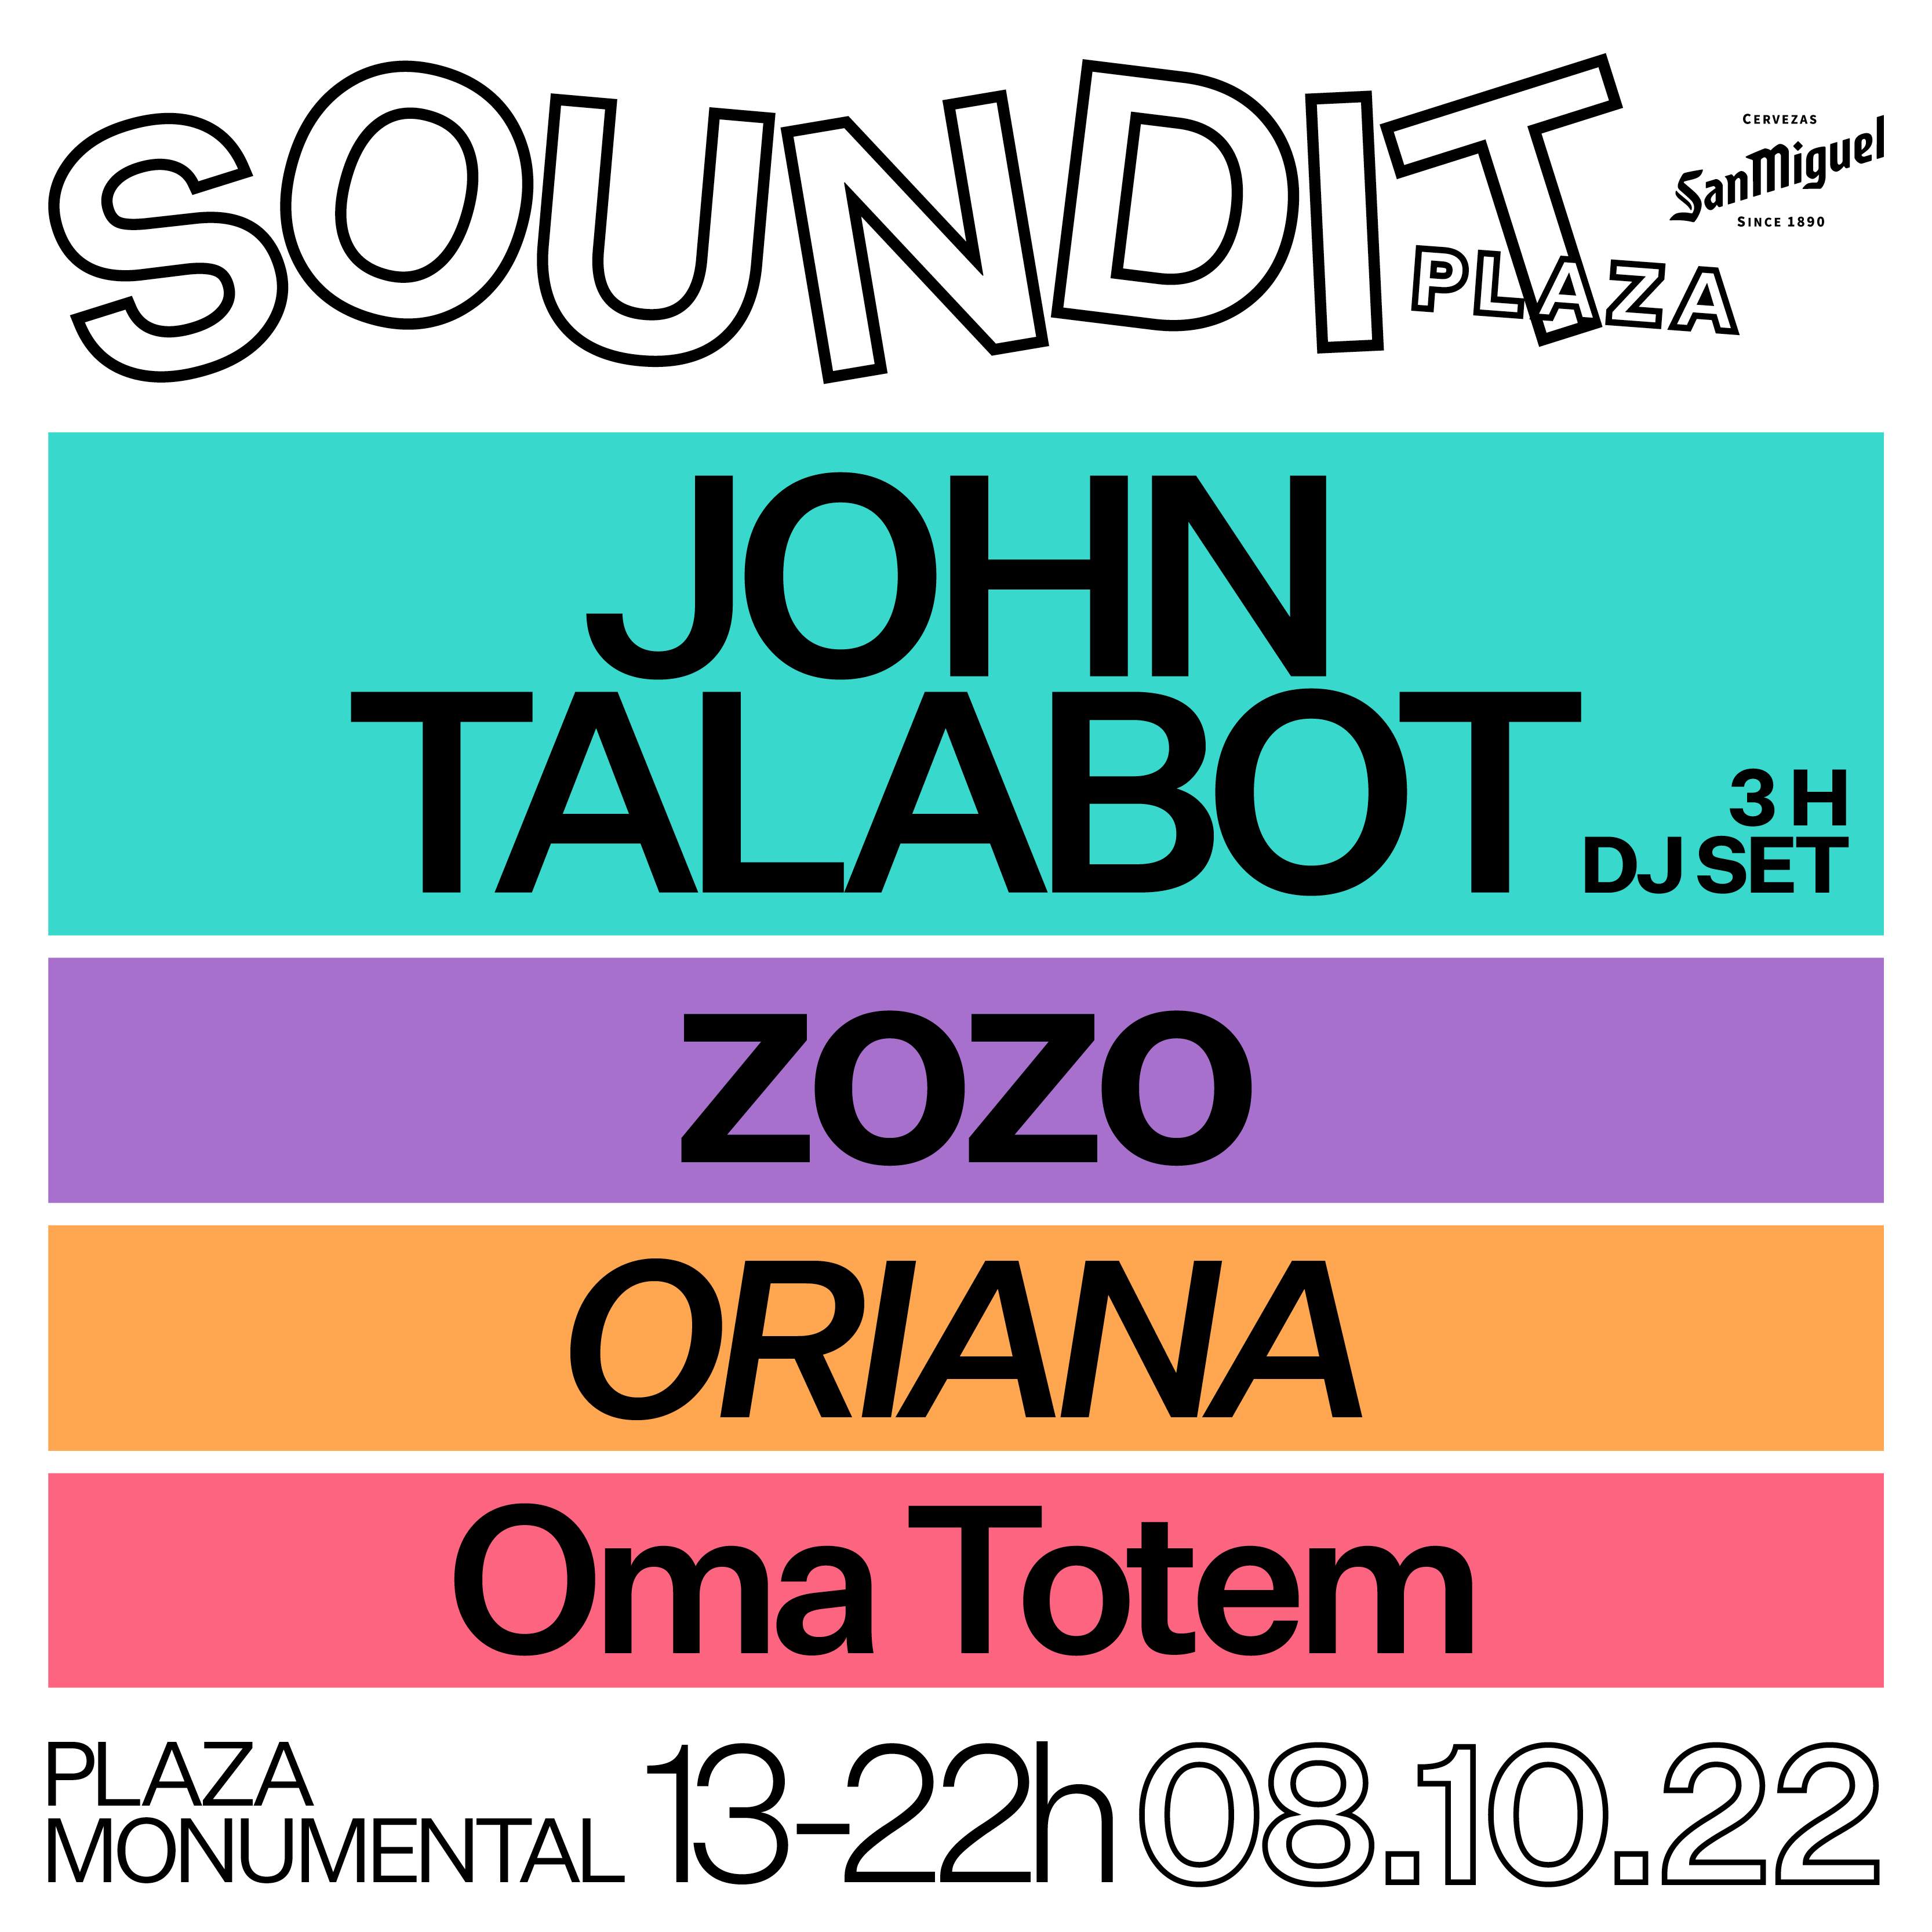 SOUNDIT Plaza: John Talabot, Zozo, Oriana, Oma Totem - Página trasera